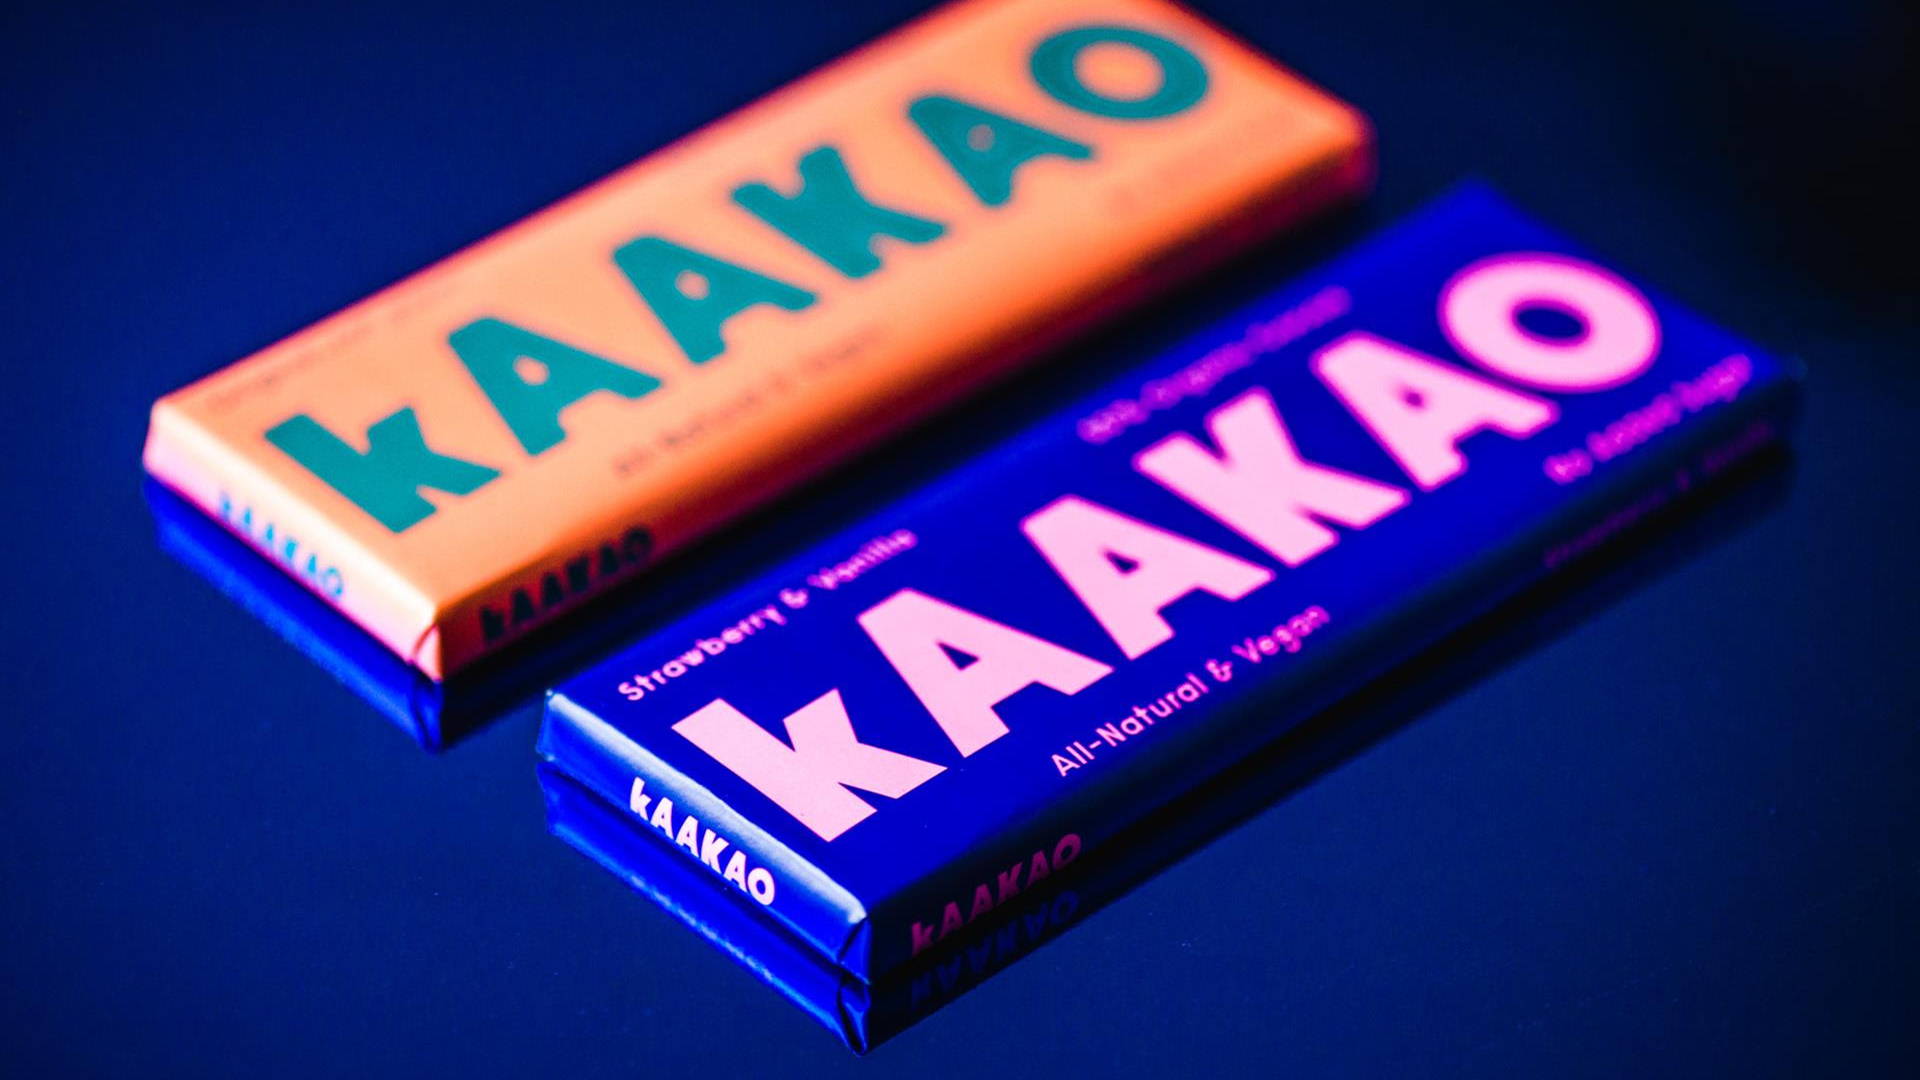 Featured image for Chocolatier kAAKAO Finds EU Regulations More Bitter Than Sweet